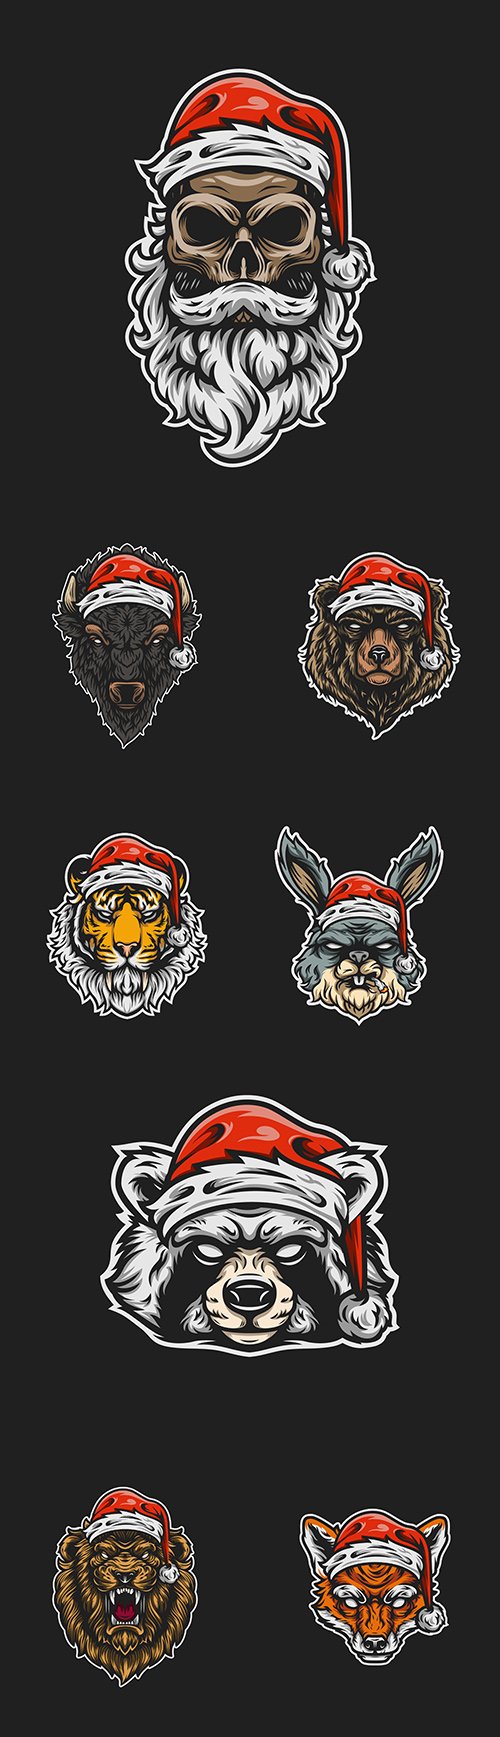 Head animals in cap of Santa painted illustrations